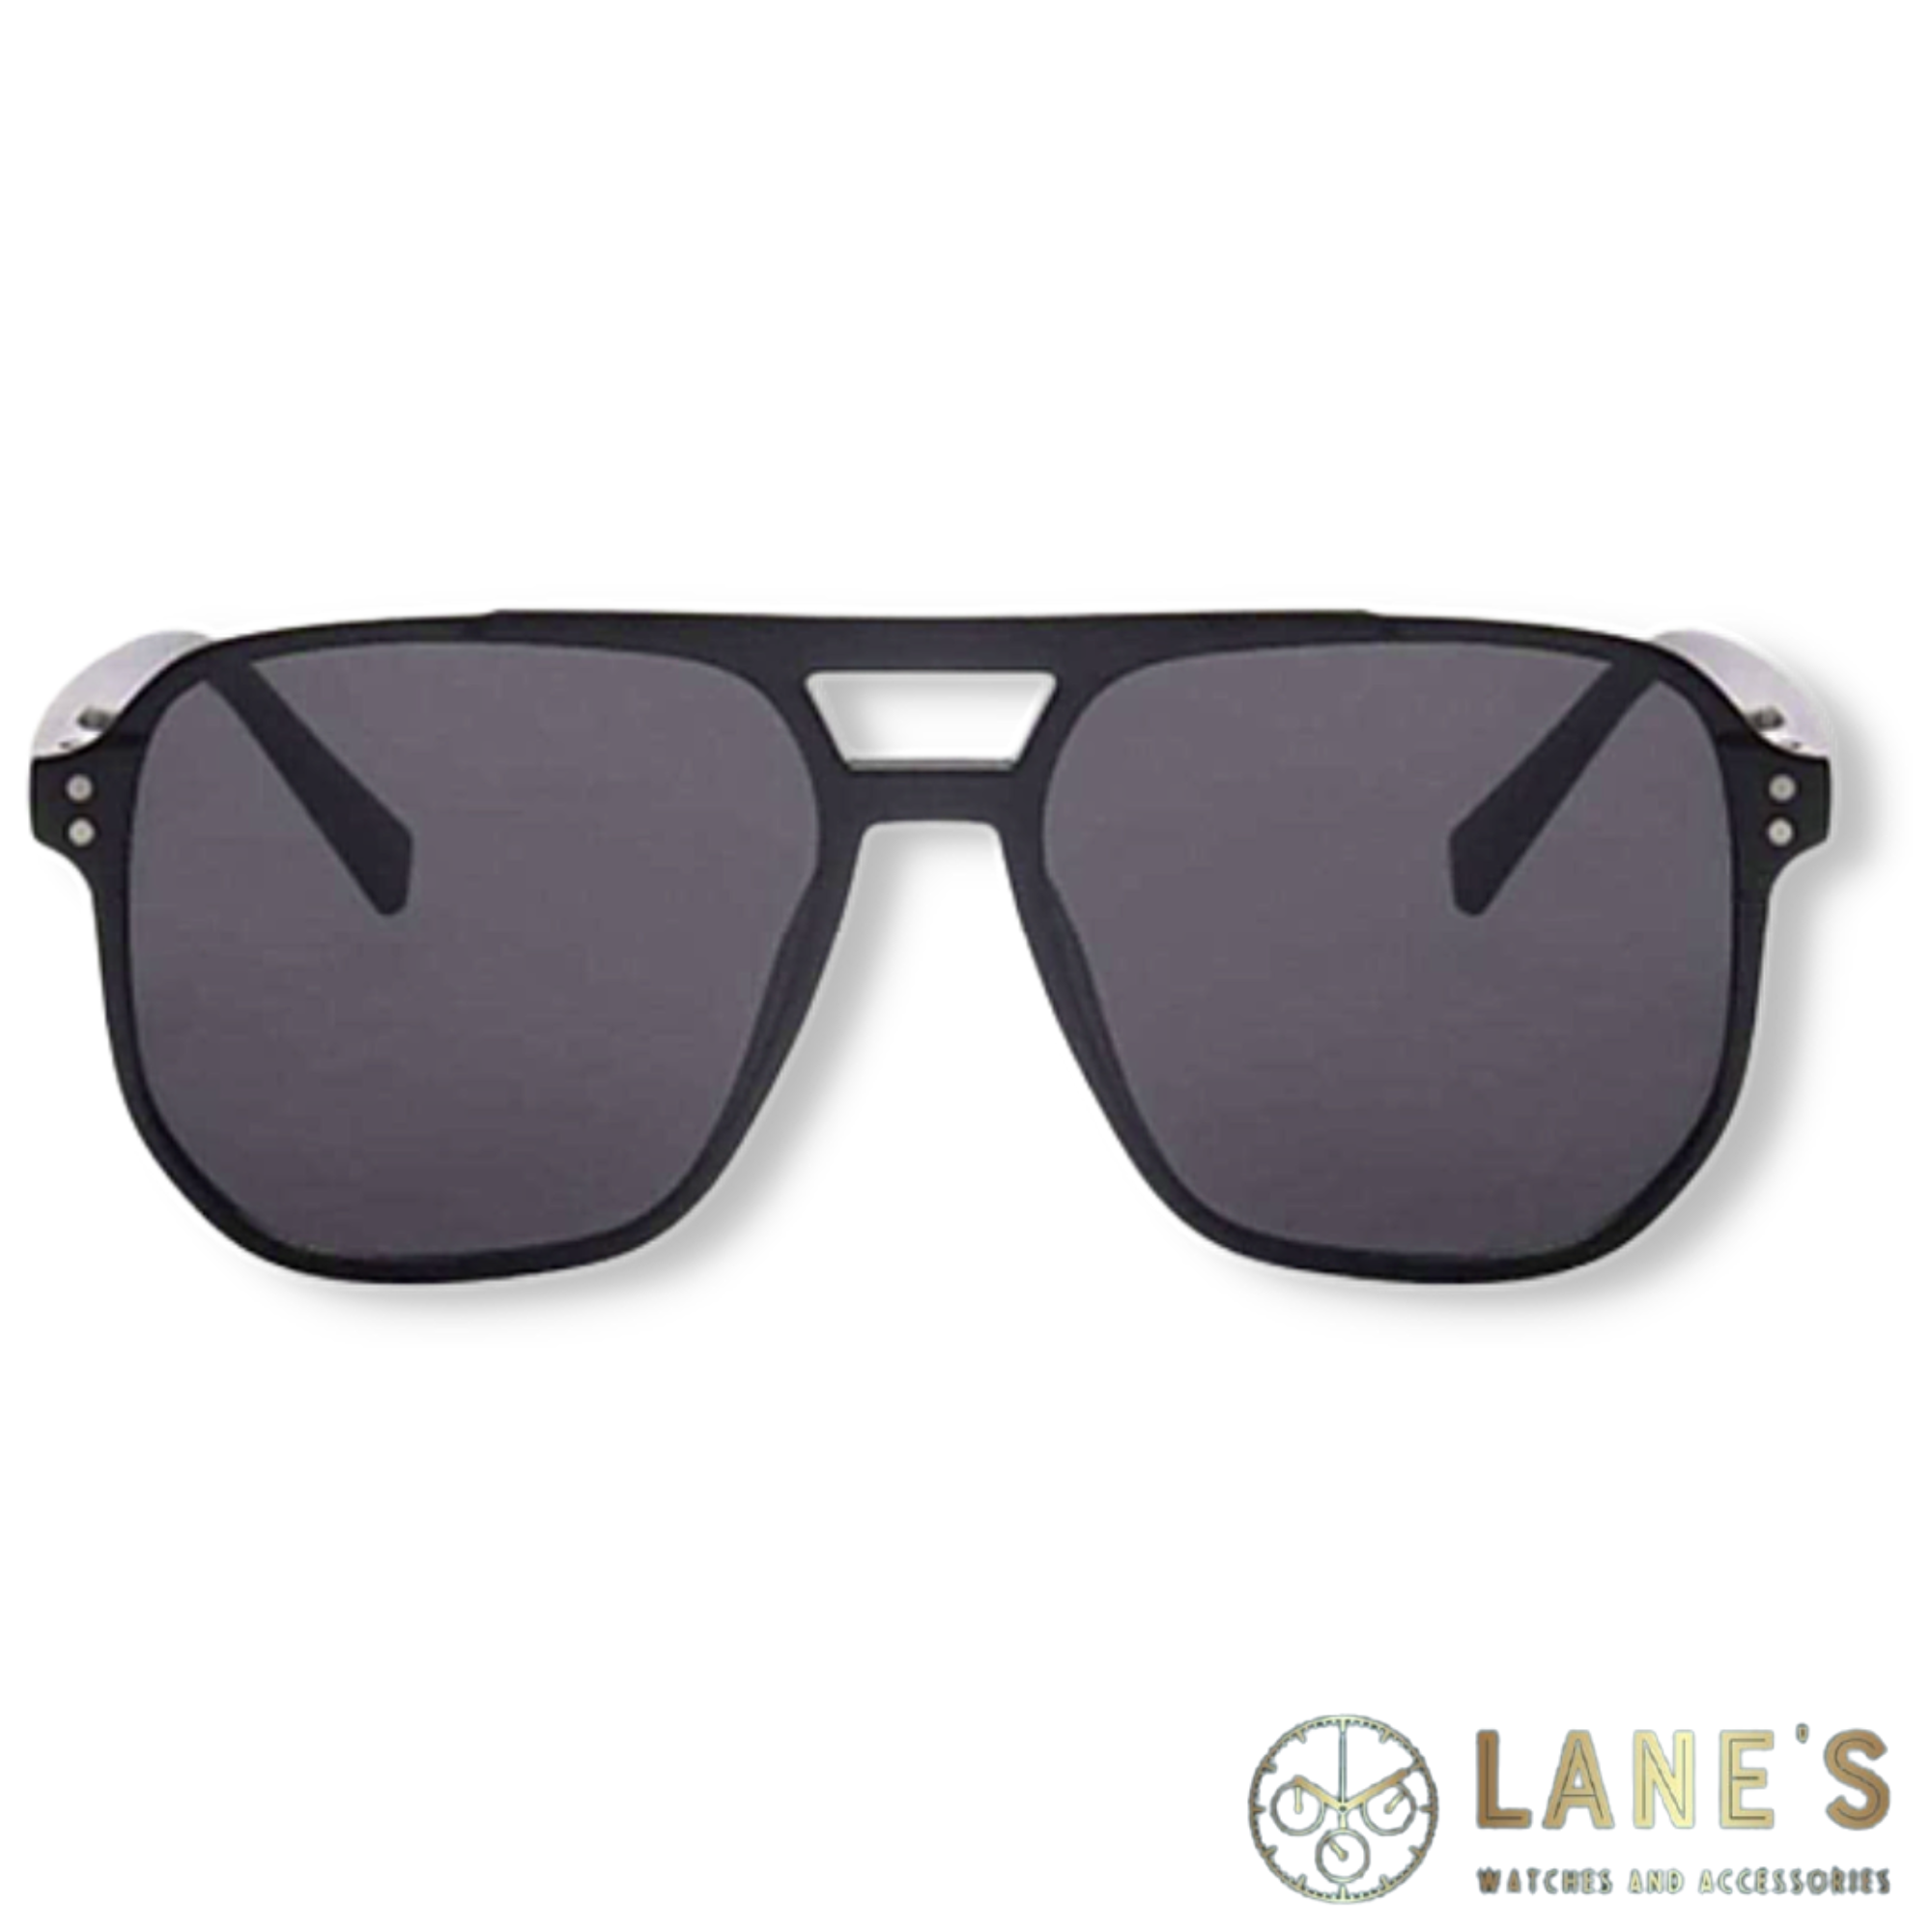 Black Double Bridged Aviator Unisex Sunglasses